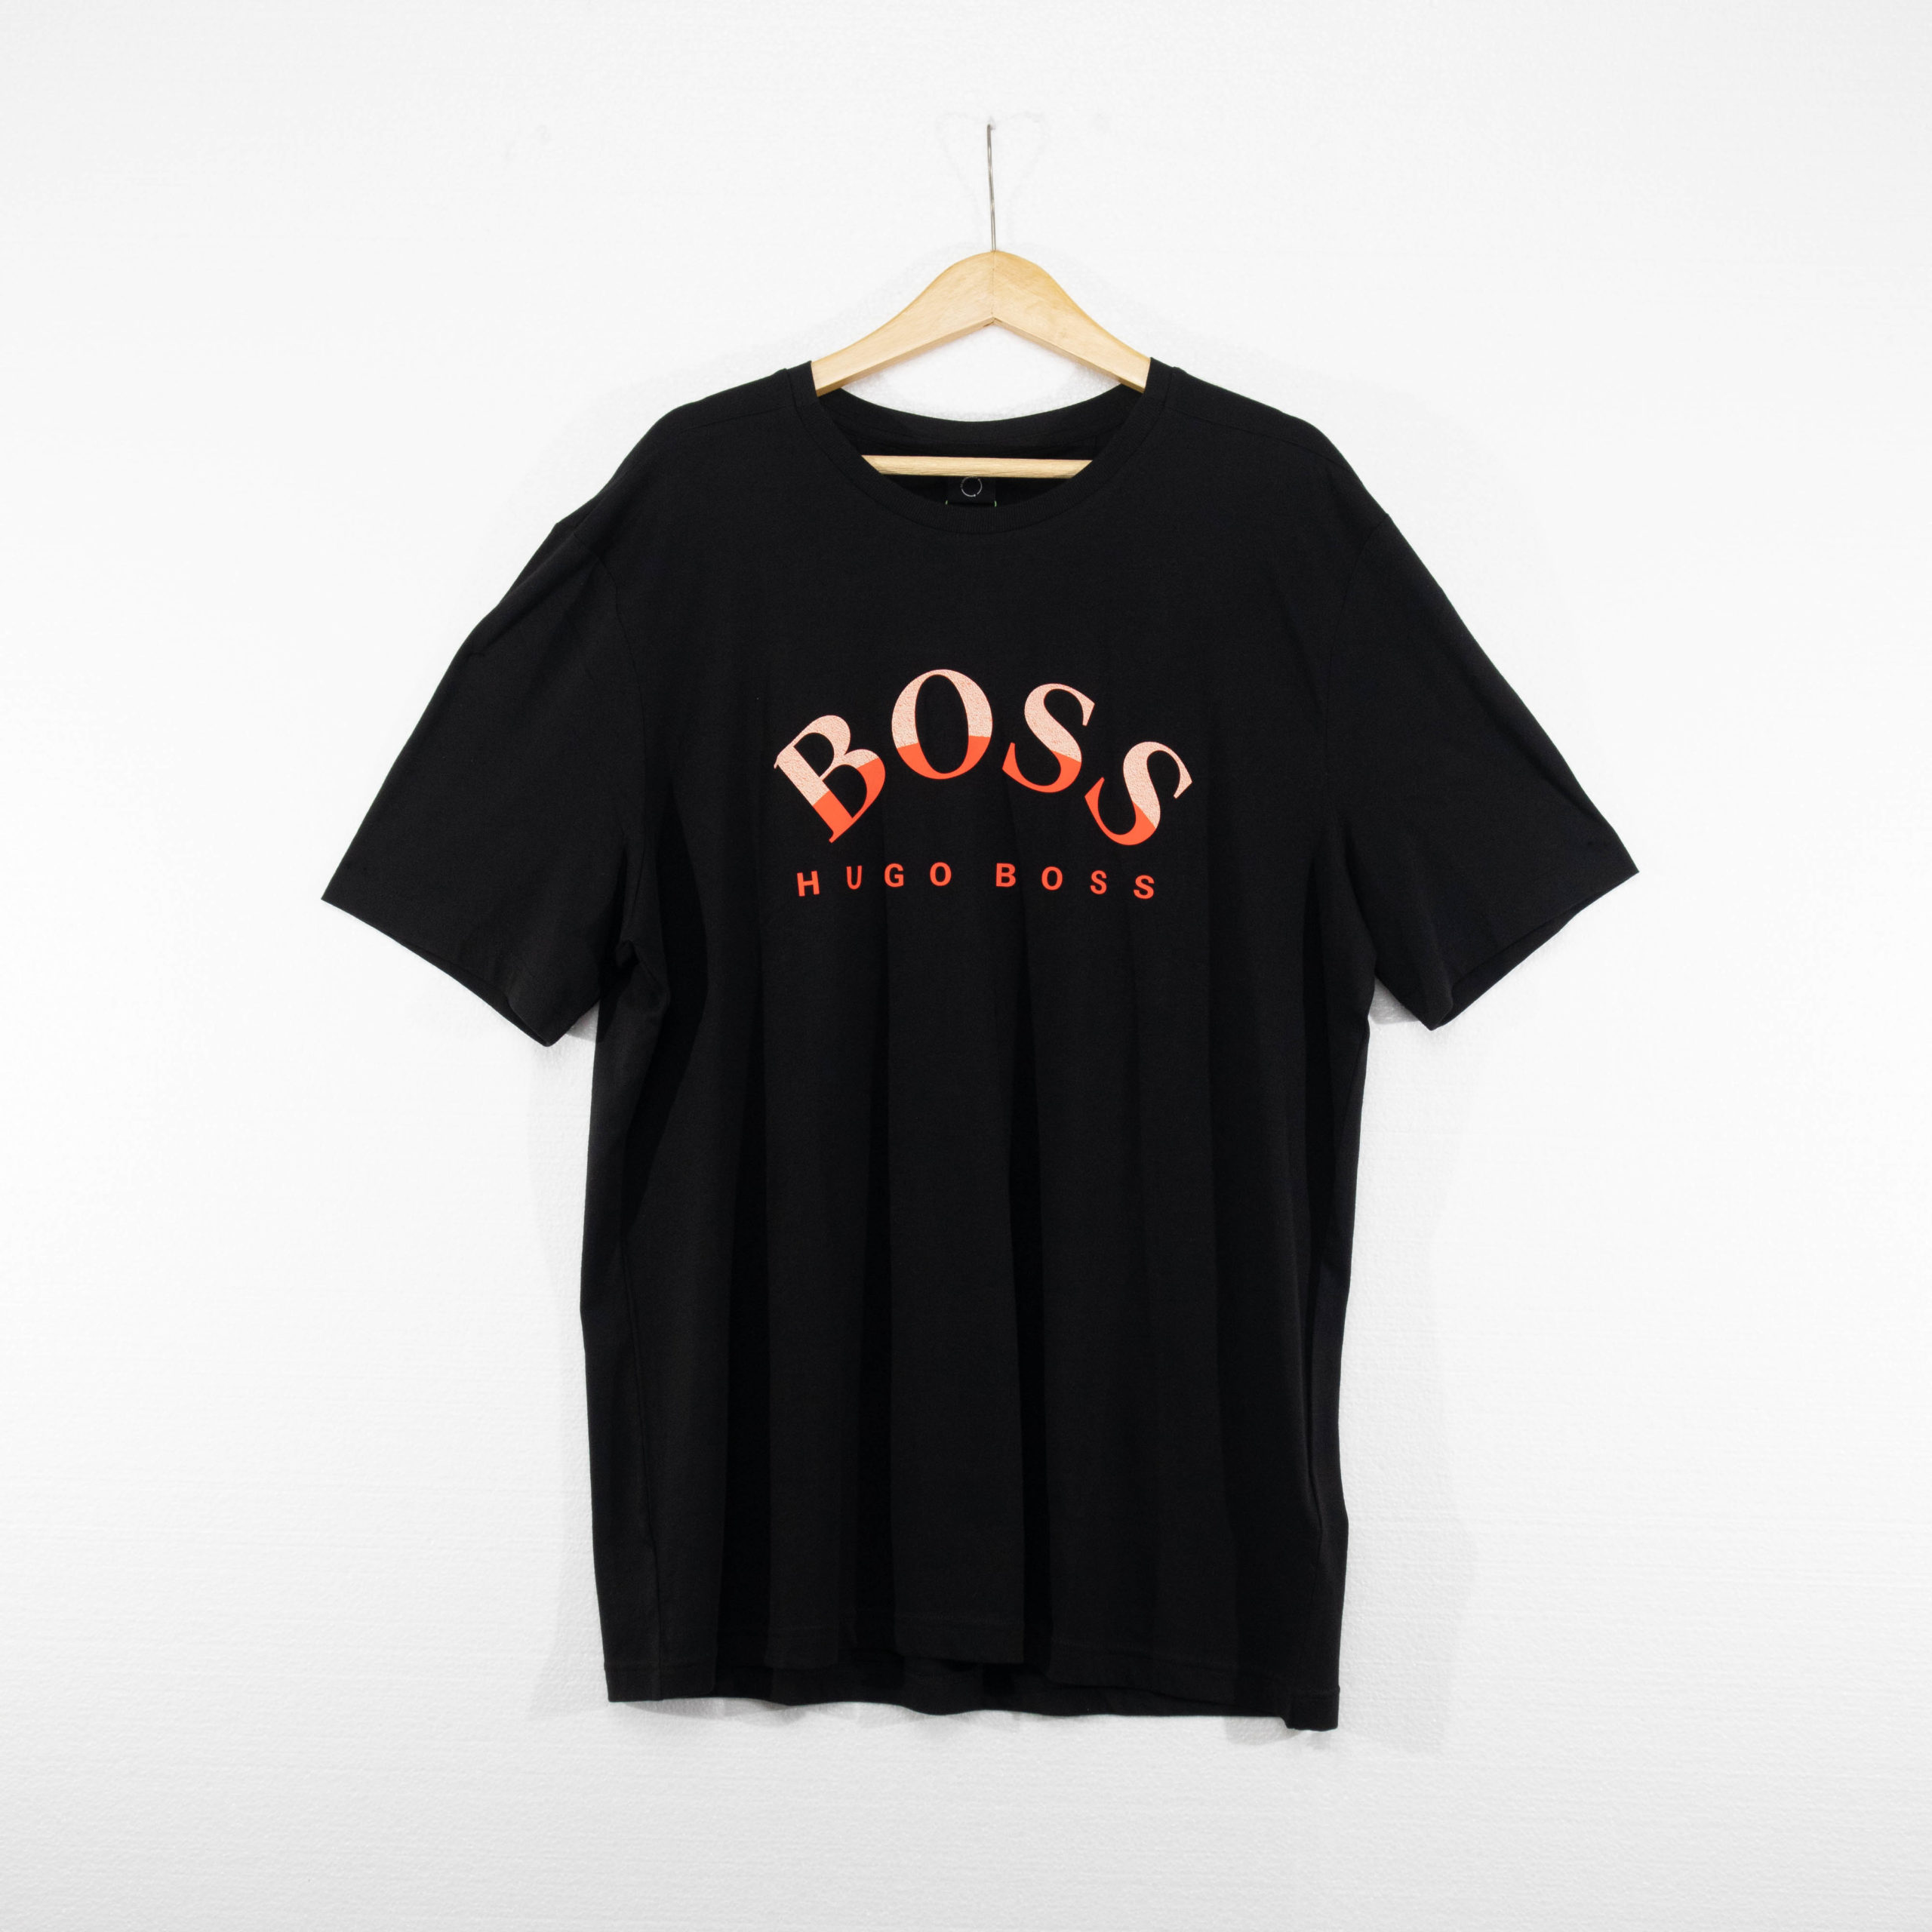 Kaos HUGO BOSS WAVE ORANGE BLACK Tshirt 100% ORIGINAL - HYPESNEAKER.ID